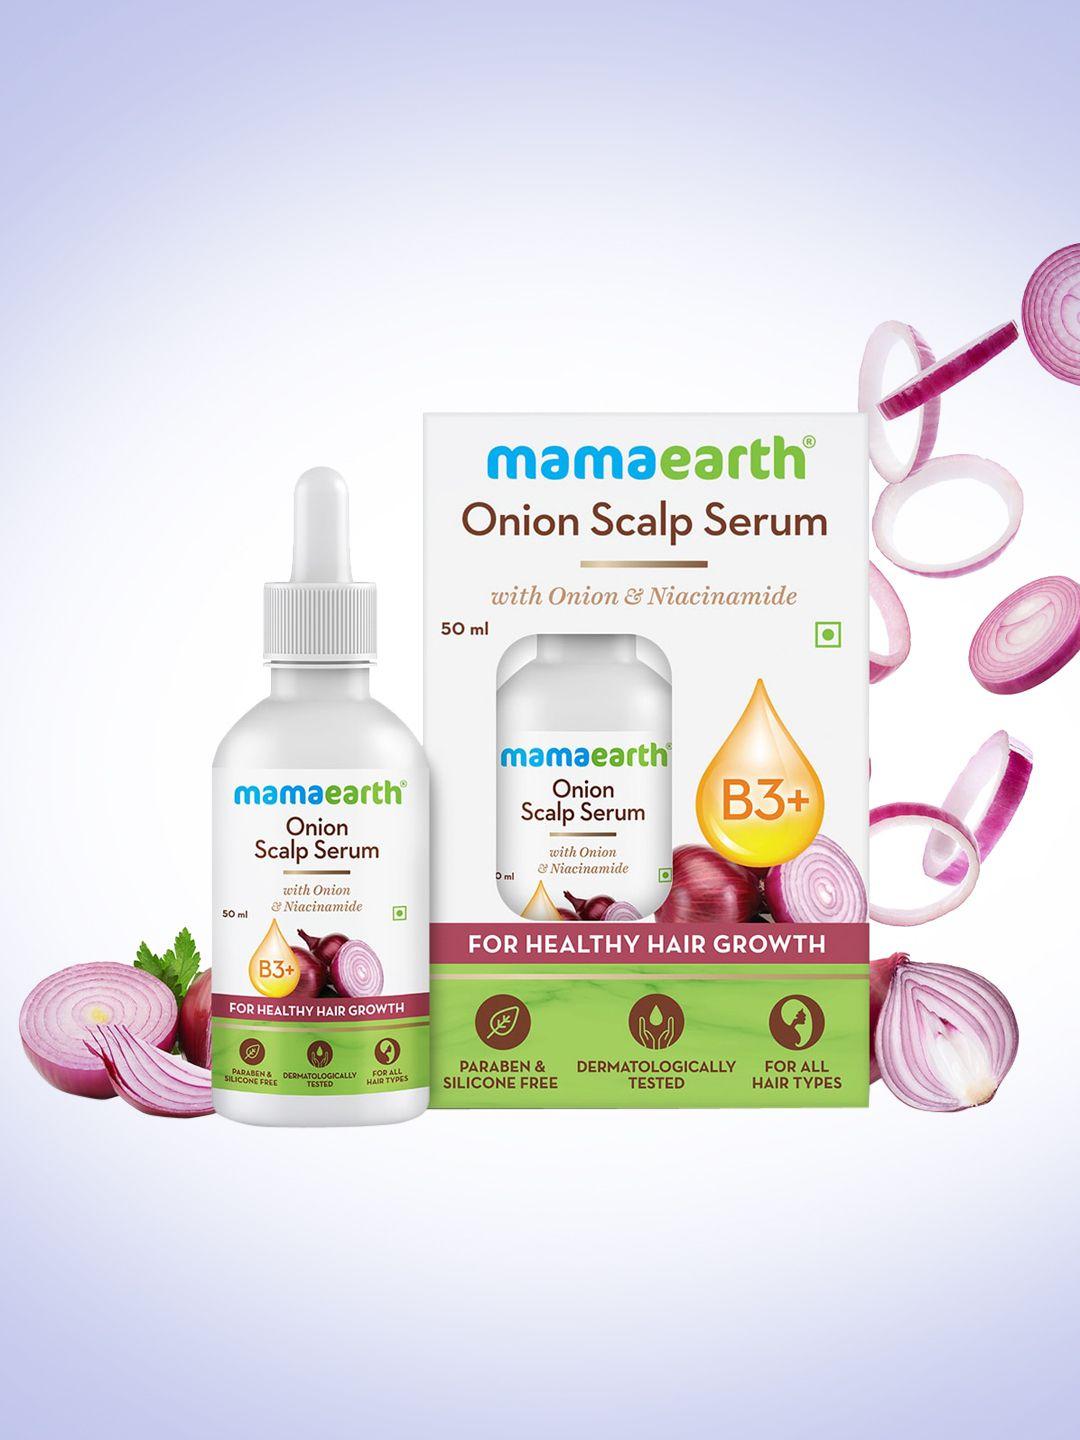 mamaearth-onion-scalp-serum-with-onion-&-niacinamide-for-healthy-hair-growth-50-ml